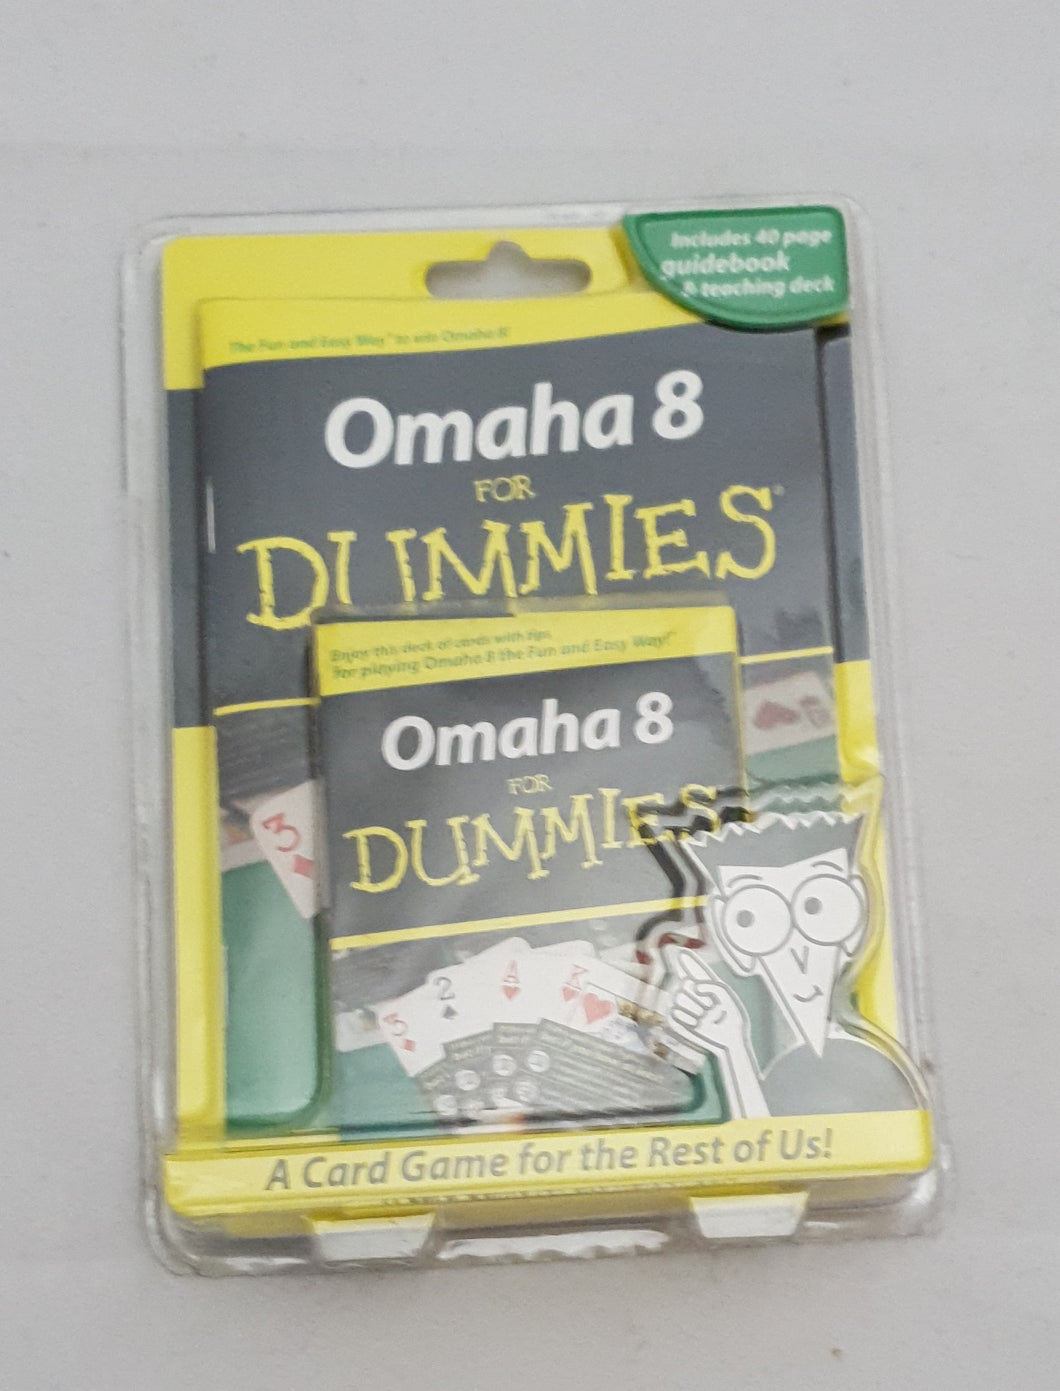 Omaha 8 for Dummies